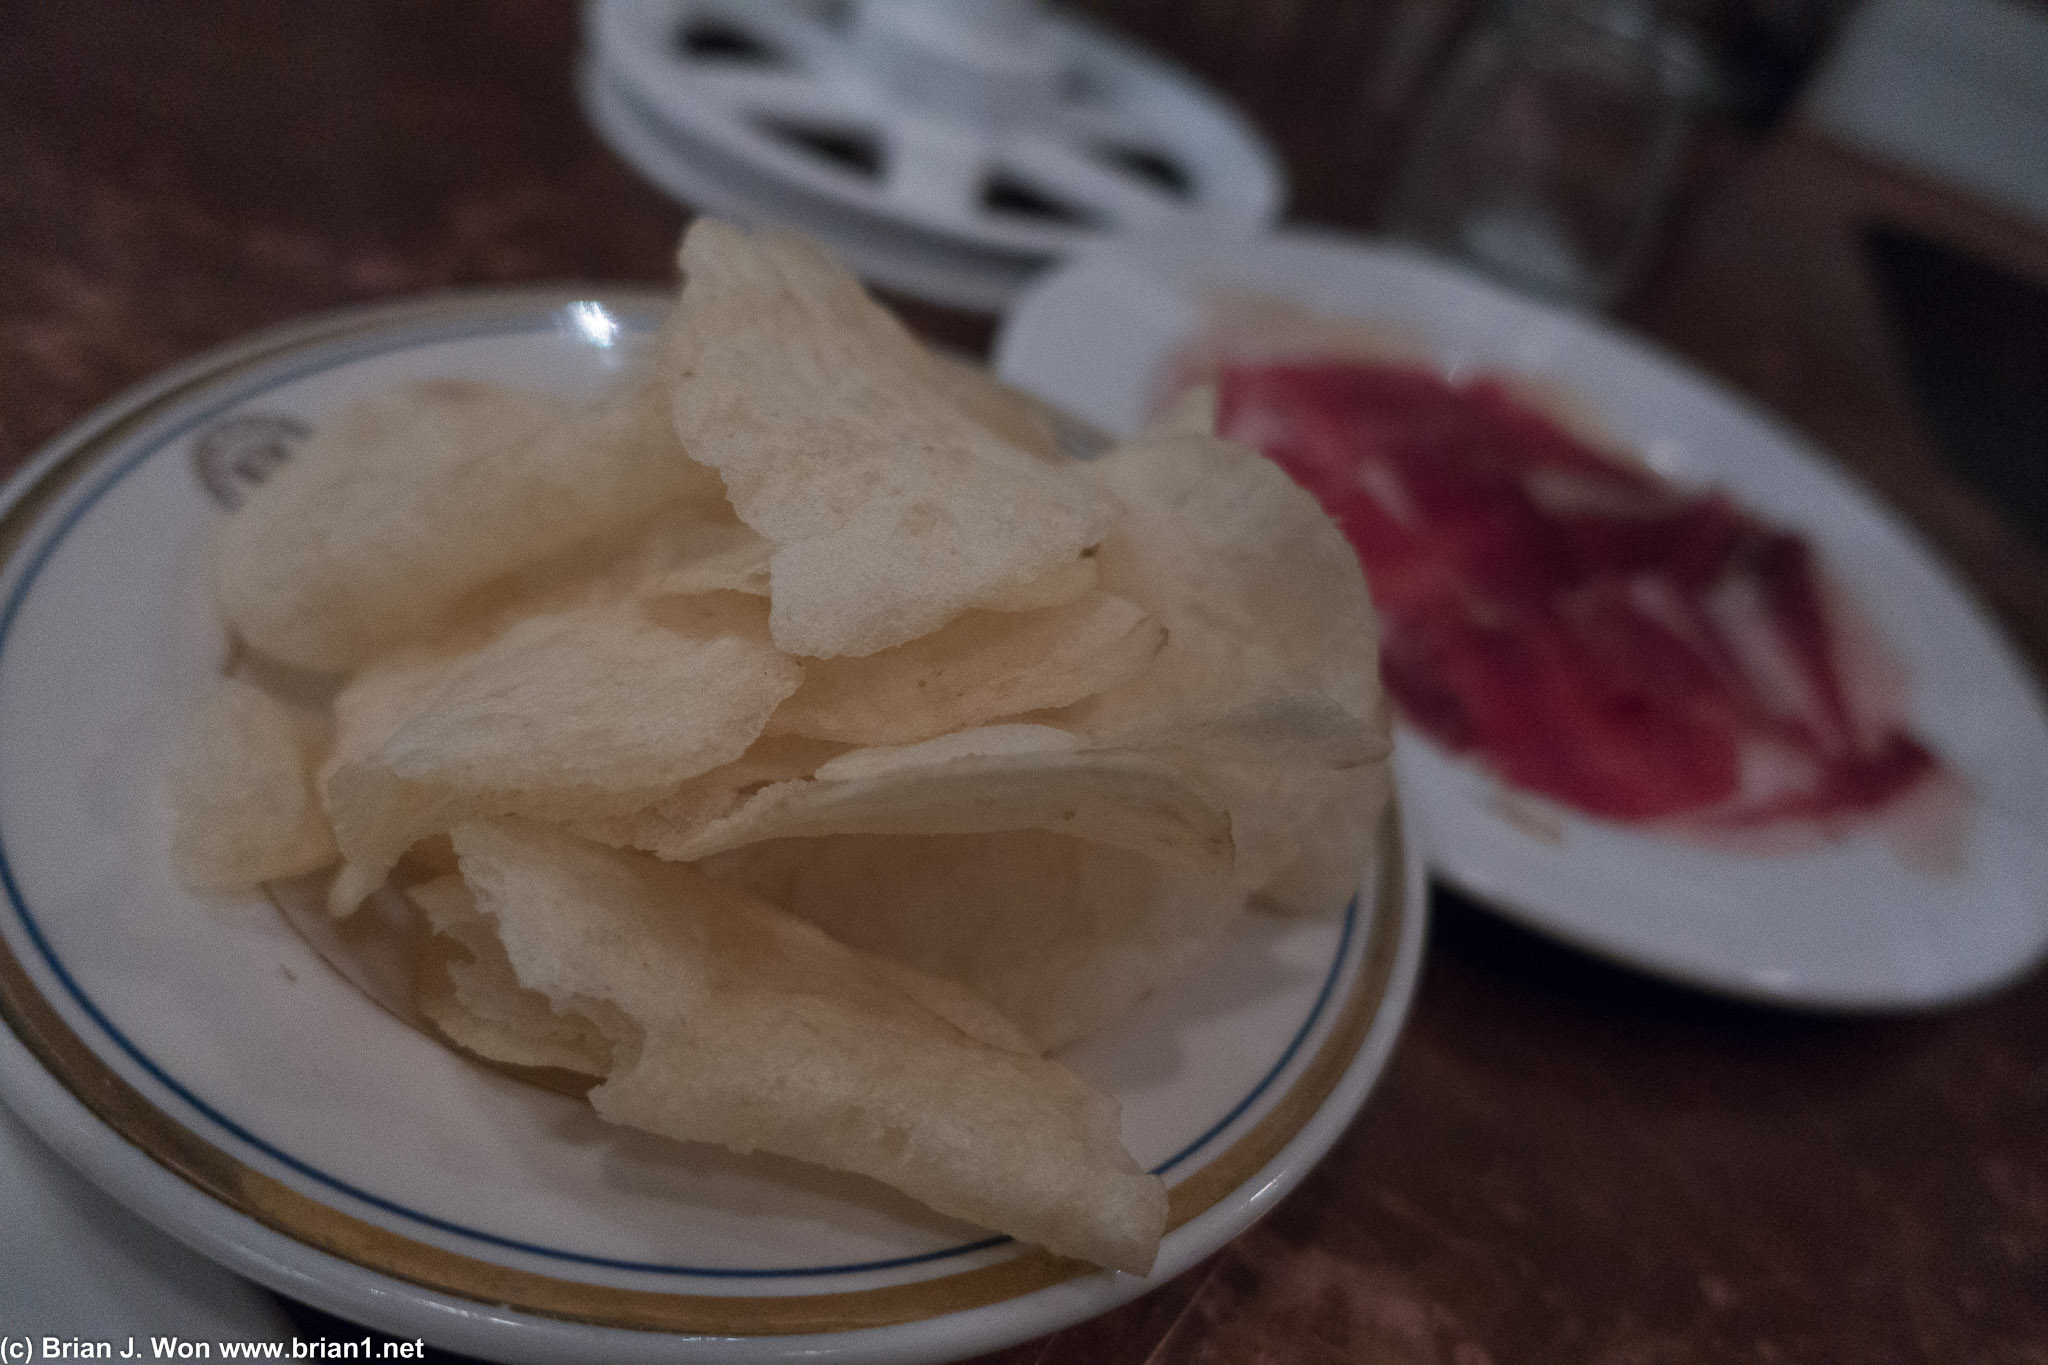 And Lays potato chips next to the serrano ham.